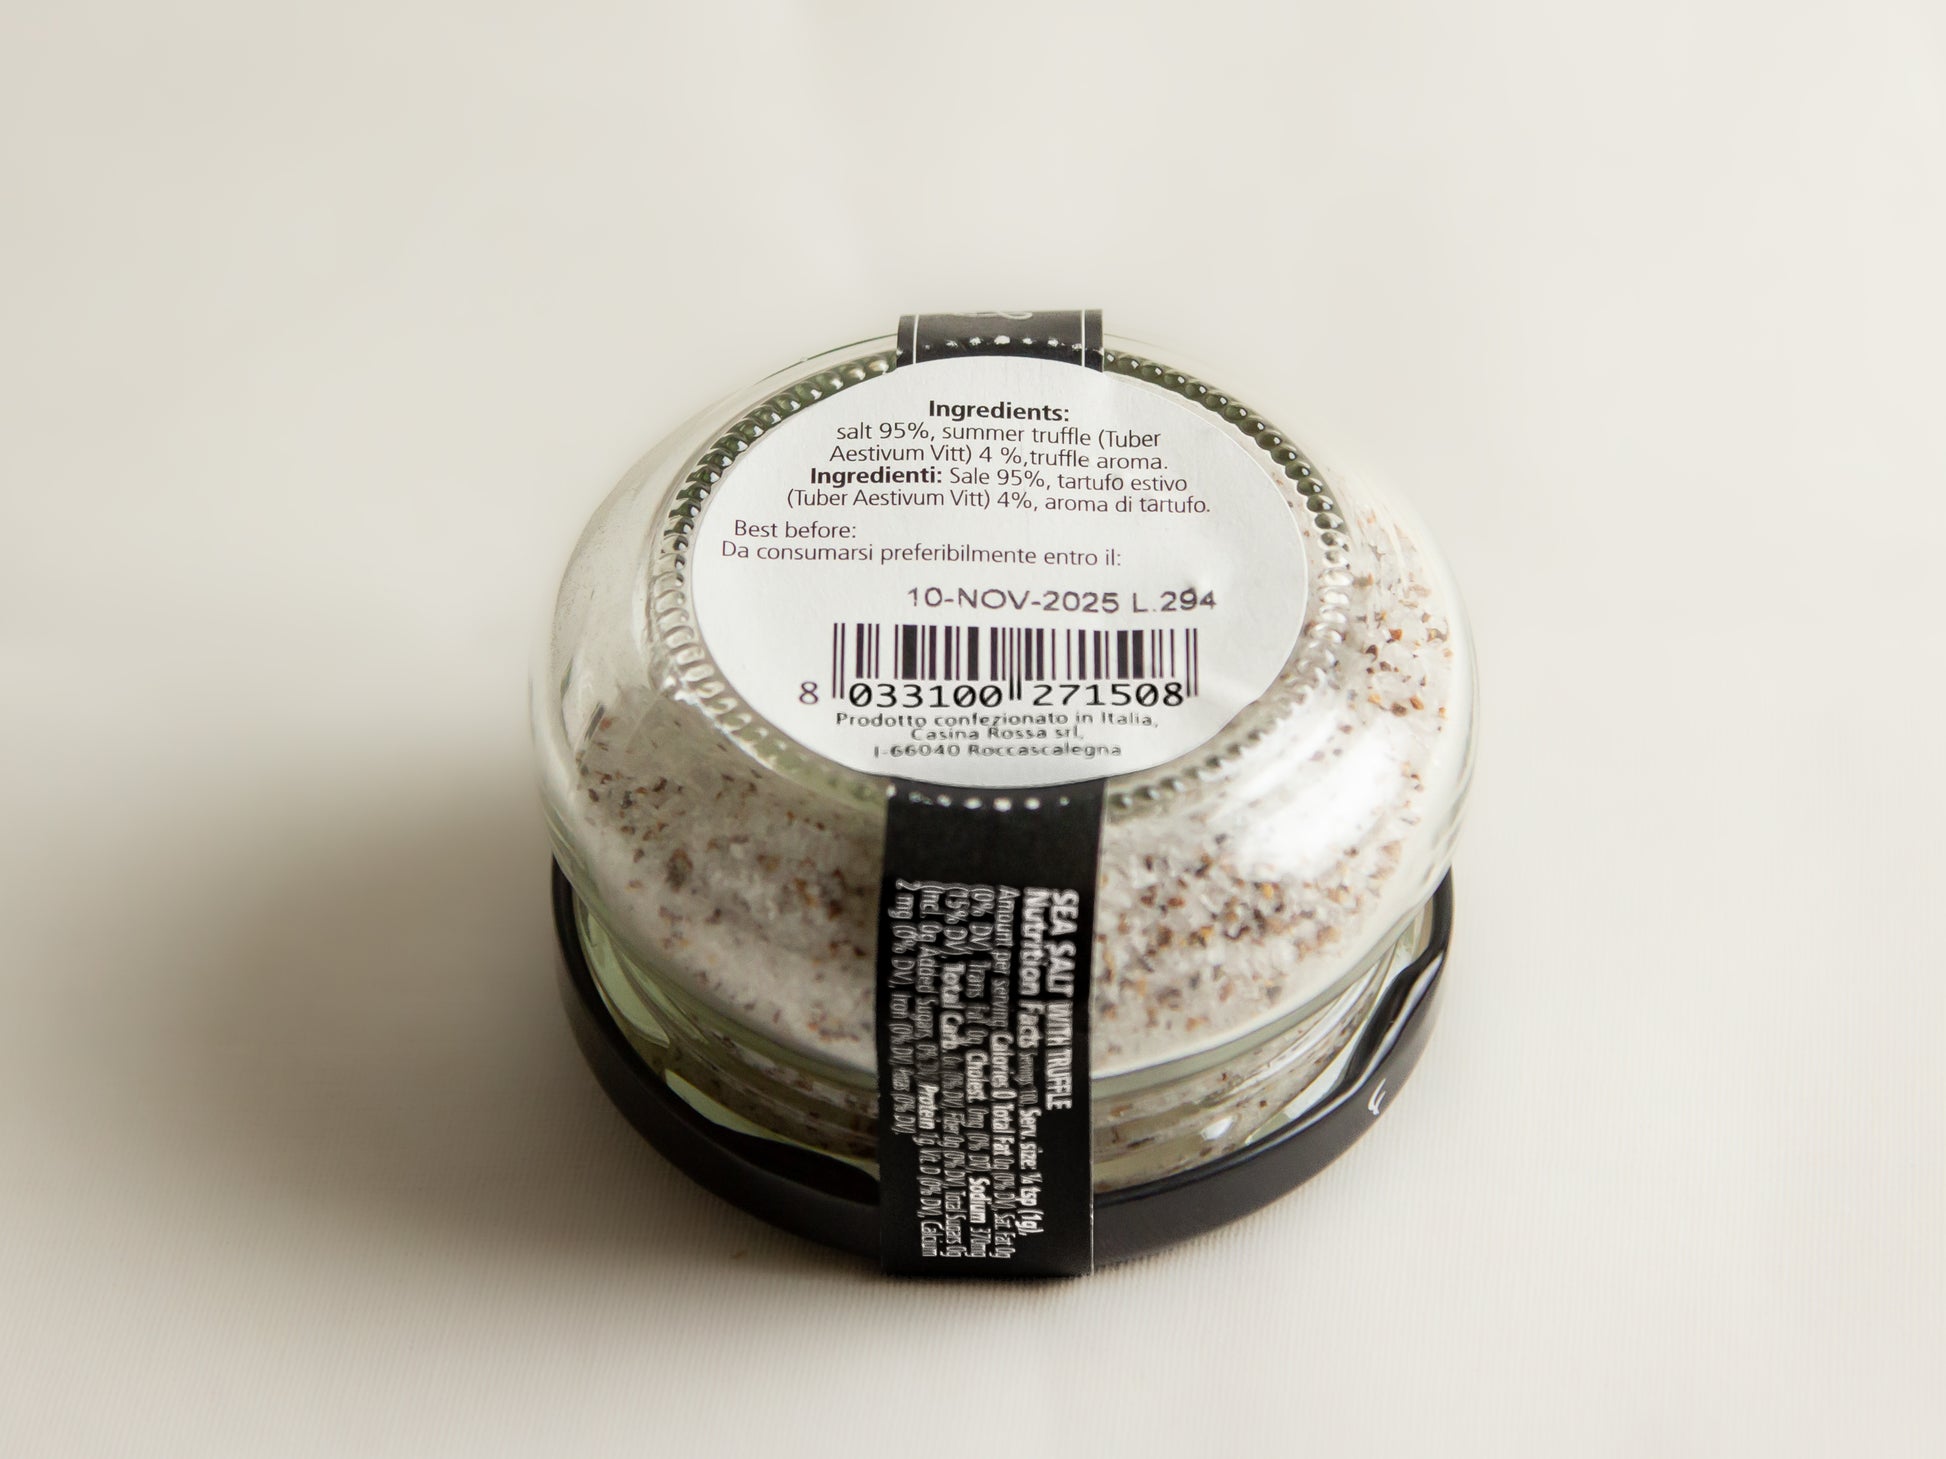 Jar of Casina Rossa Truffle Salt Ingredients